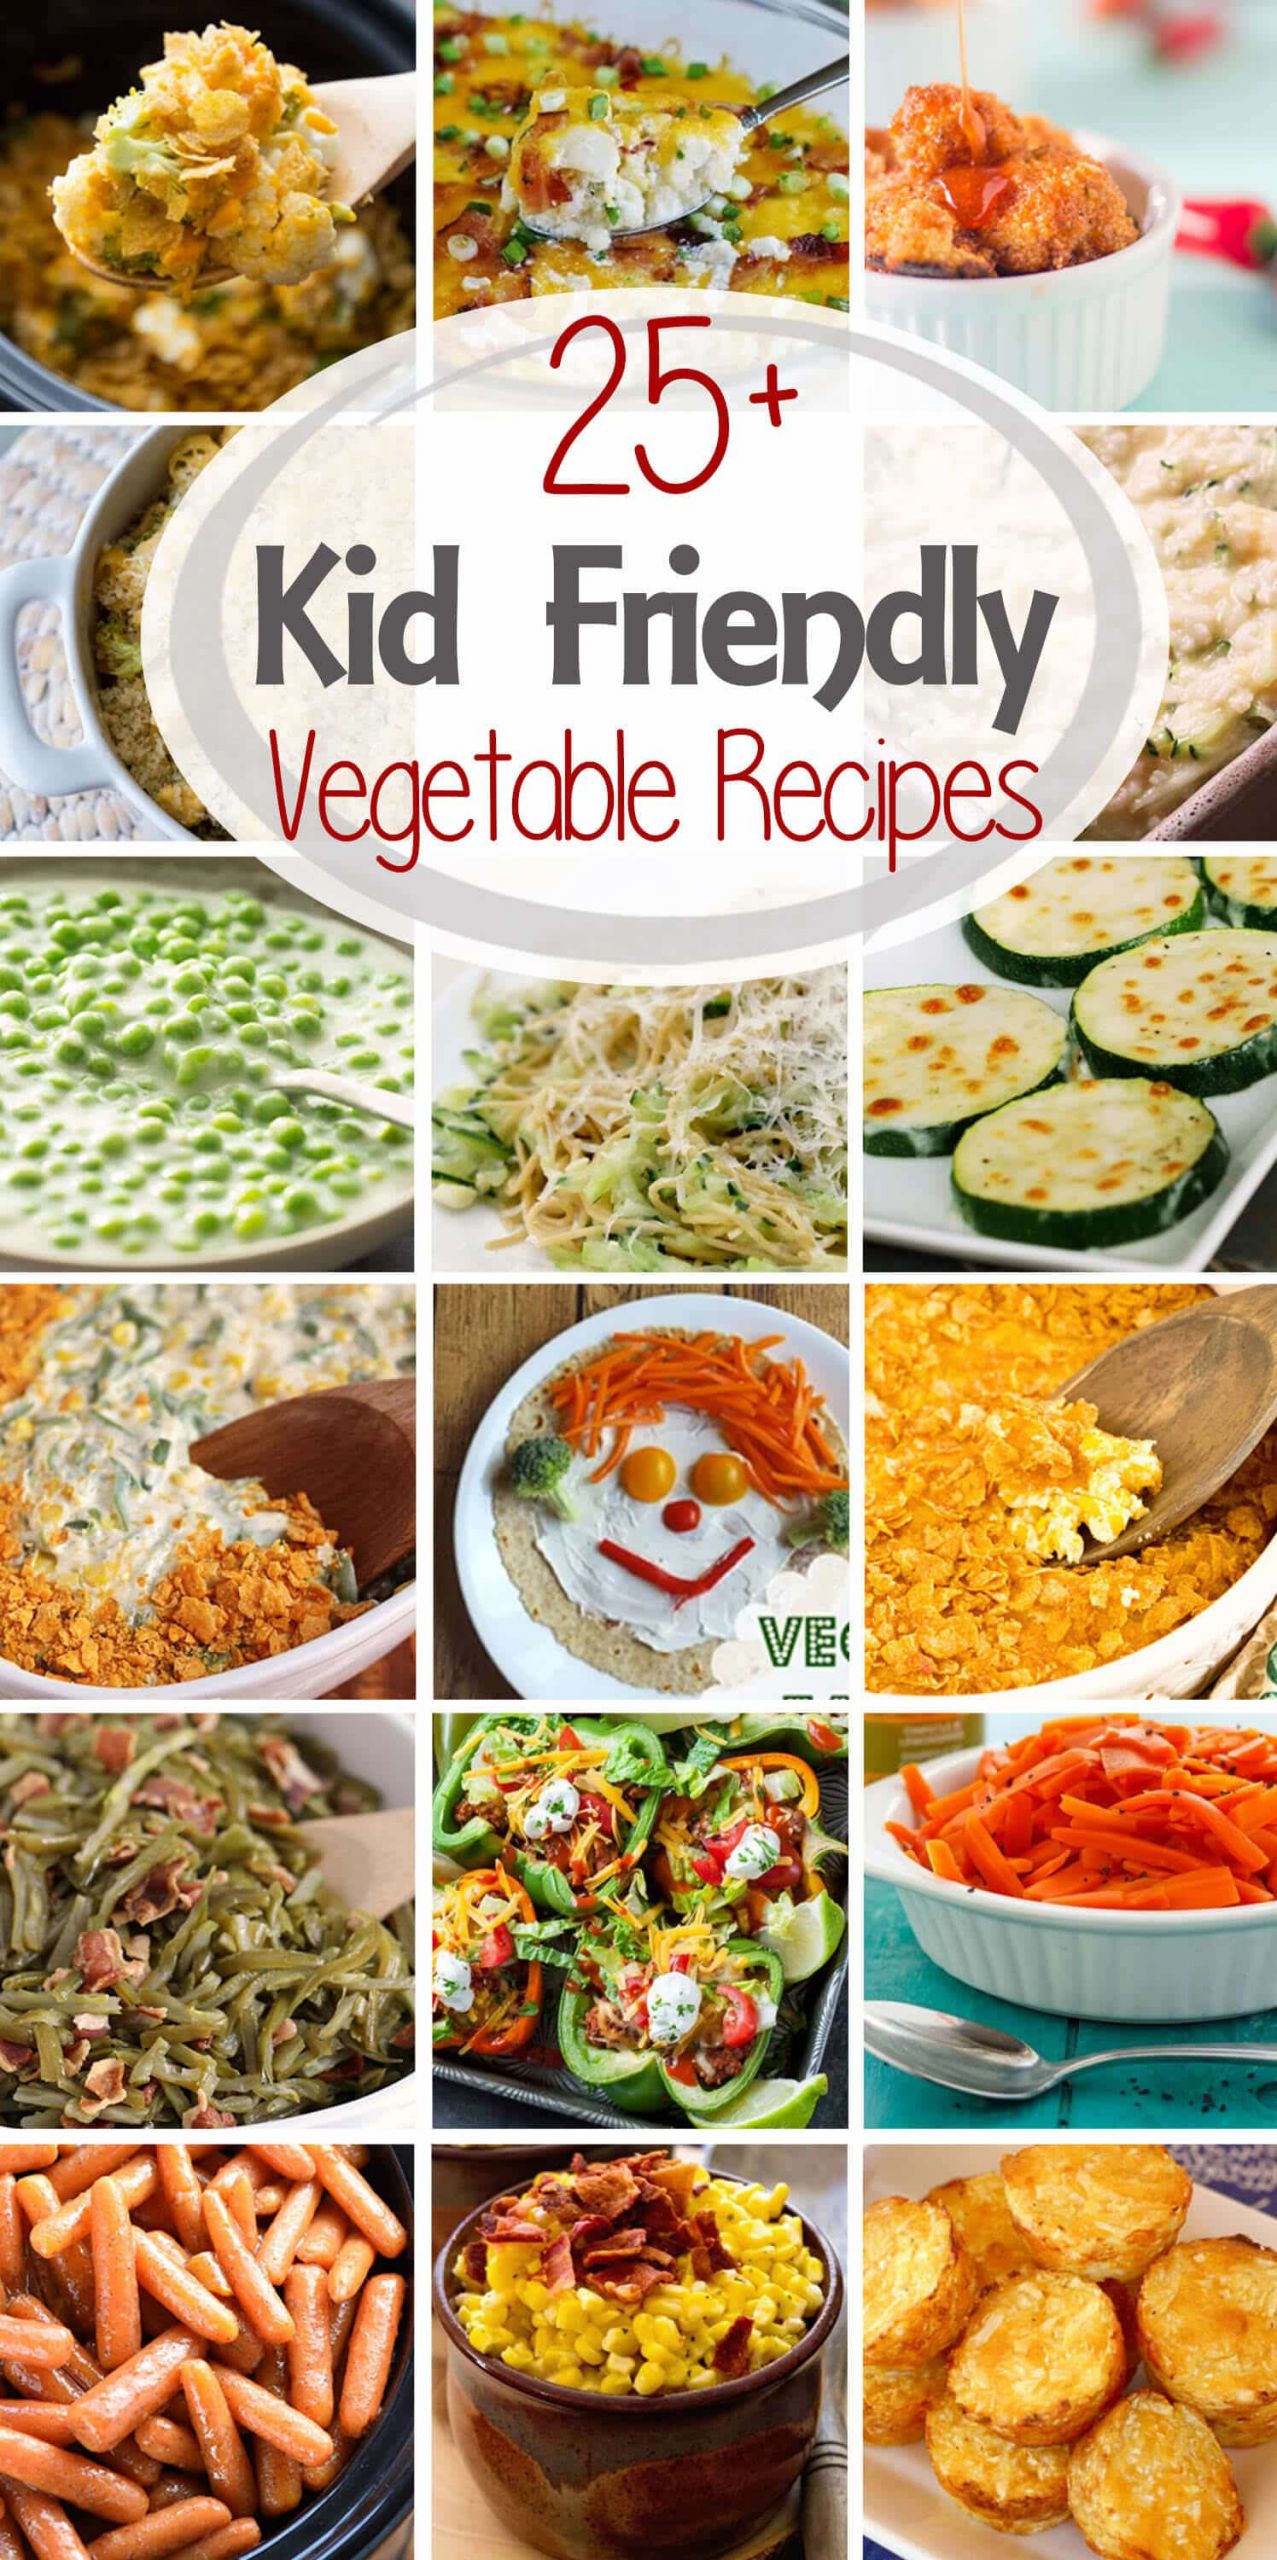 Vegetable Recipes For Kids
 25 Kid Friendly Ve able Recipes Julie s Eats & Treats